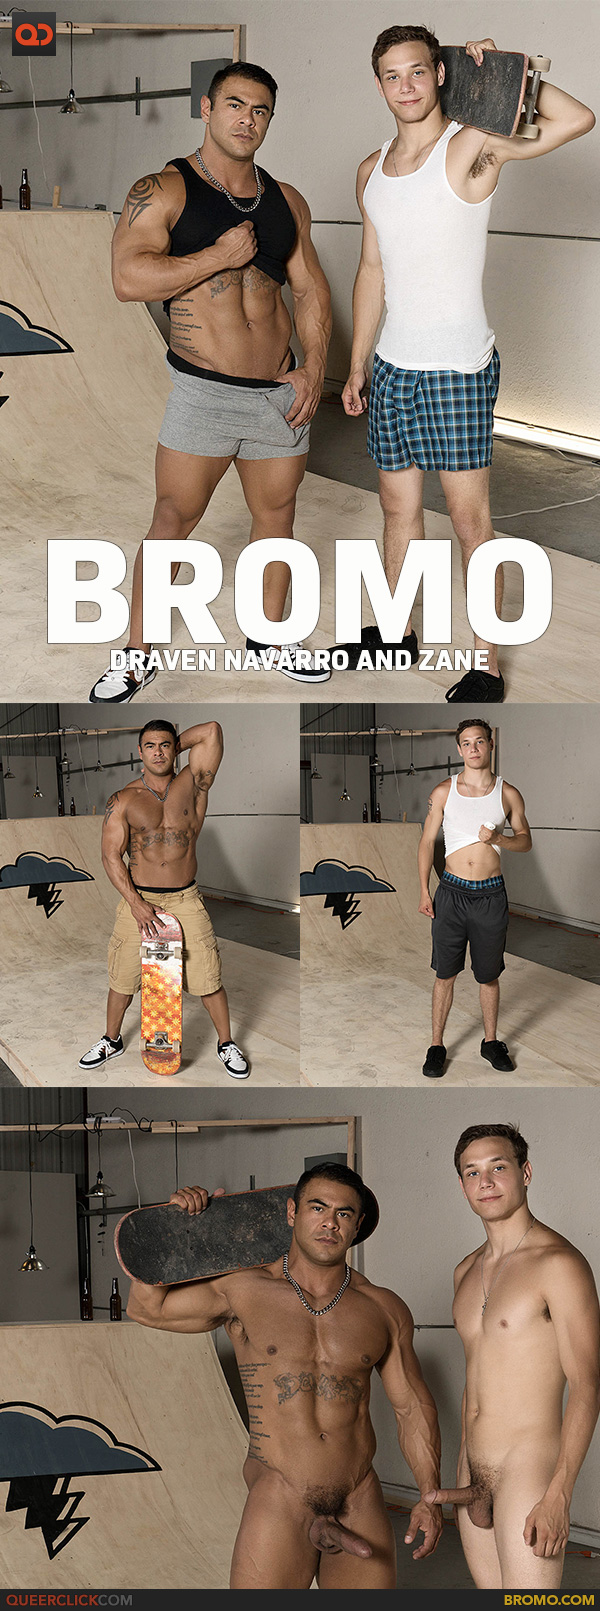 Bromo: Draven Navarro and Zane